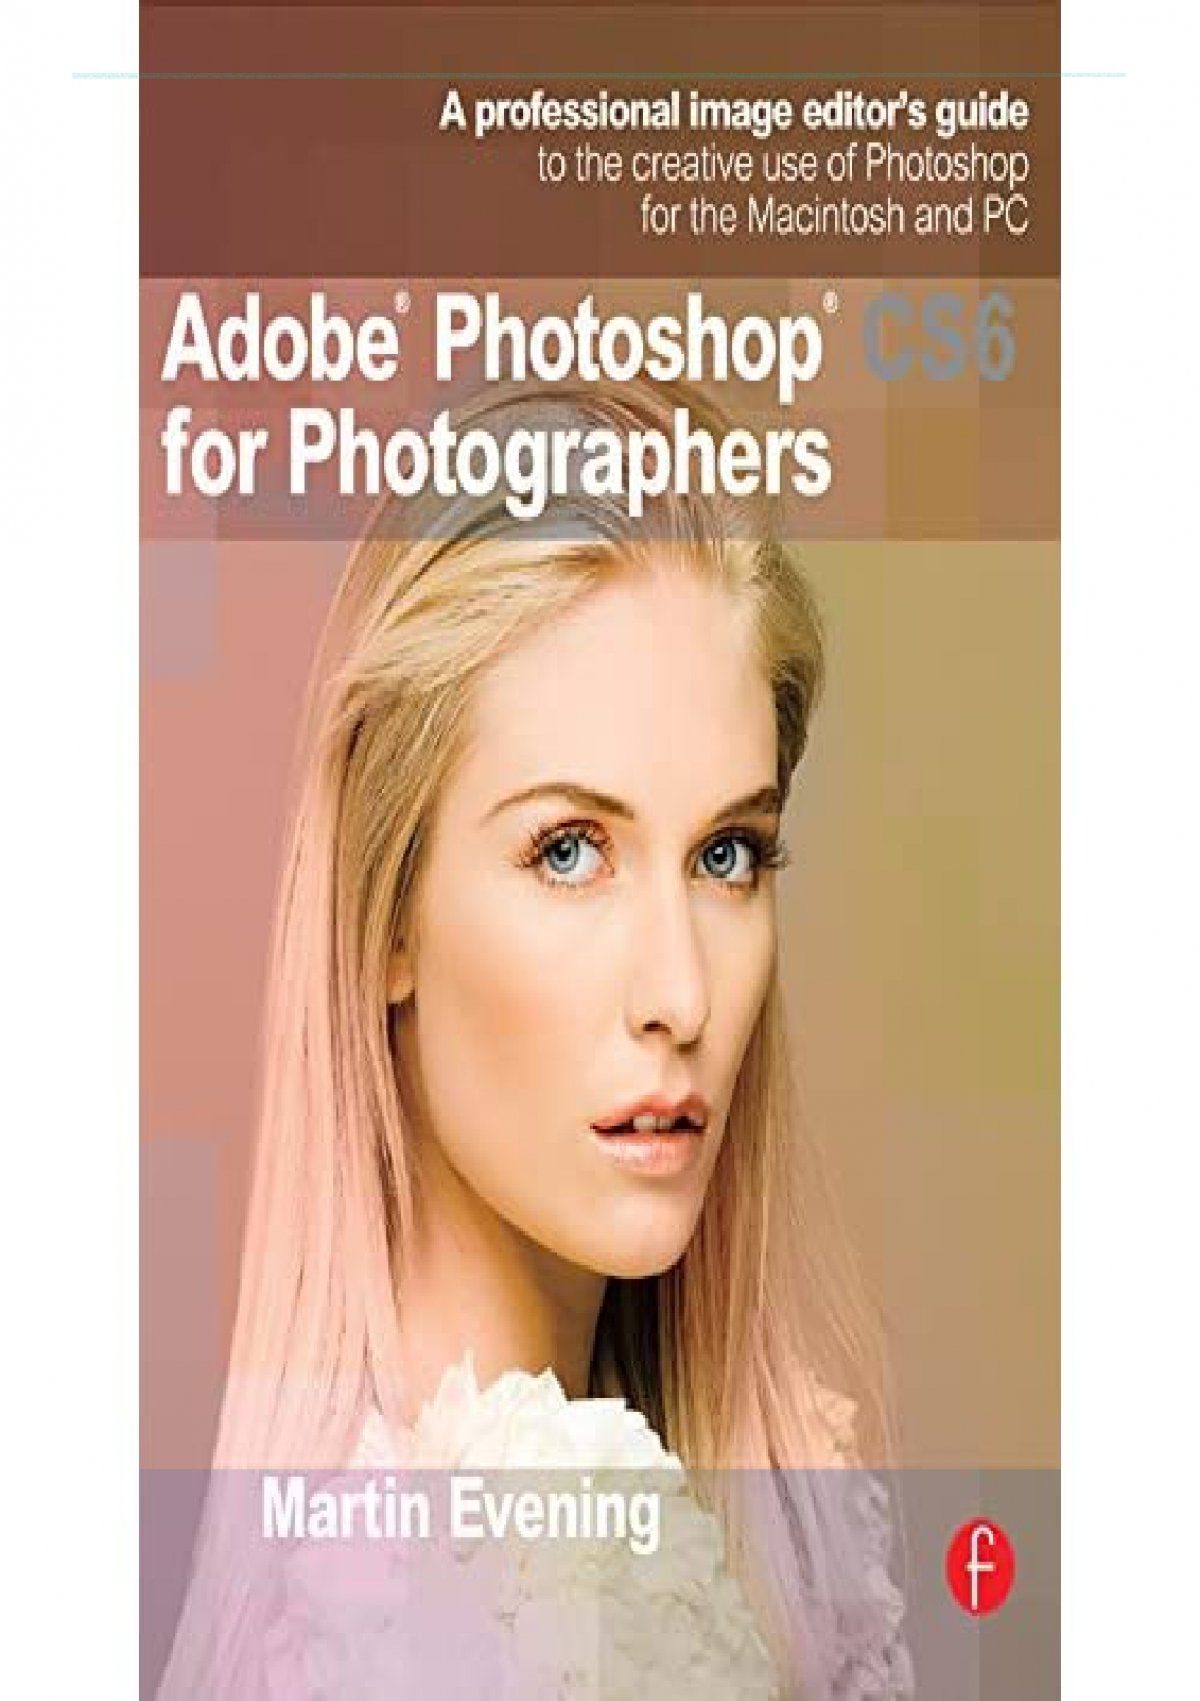 adobe photoshop cs6 guide pdf free download